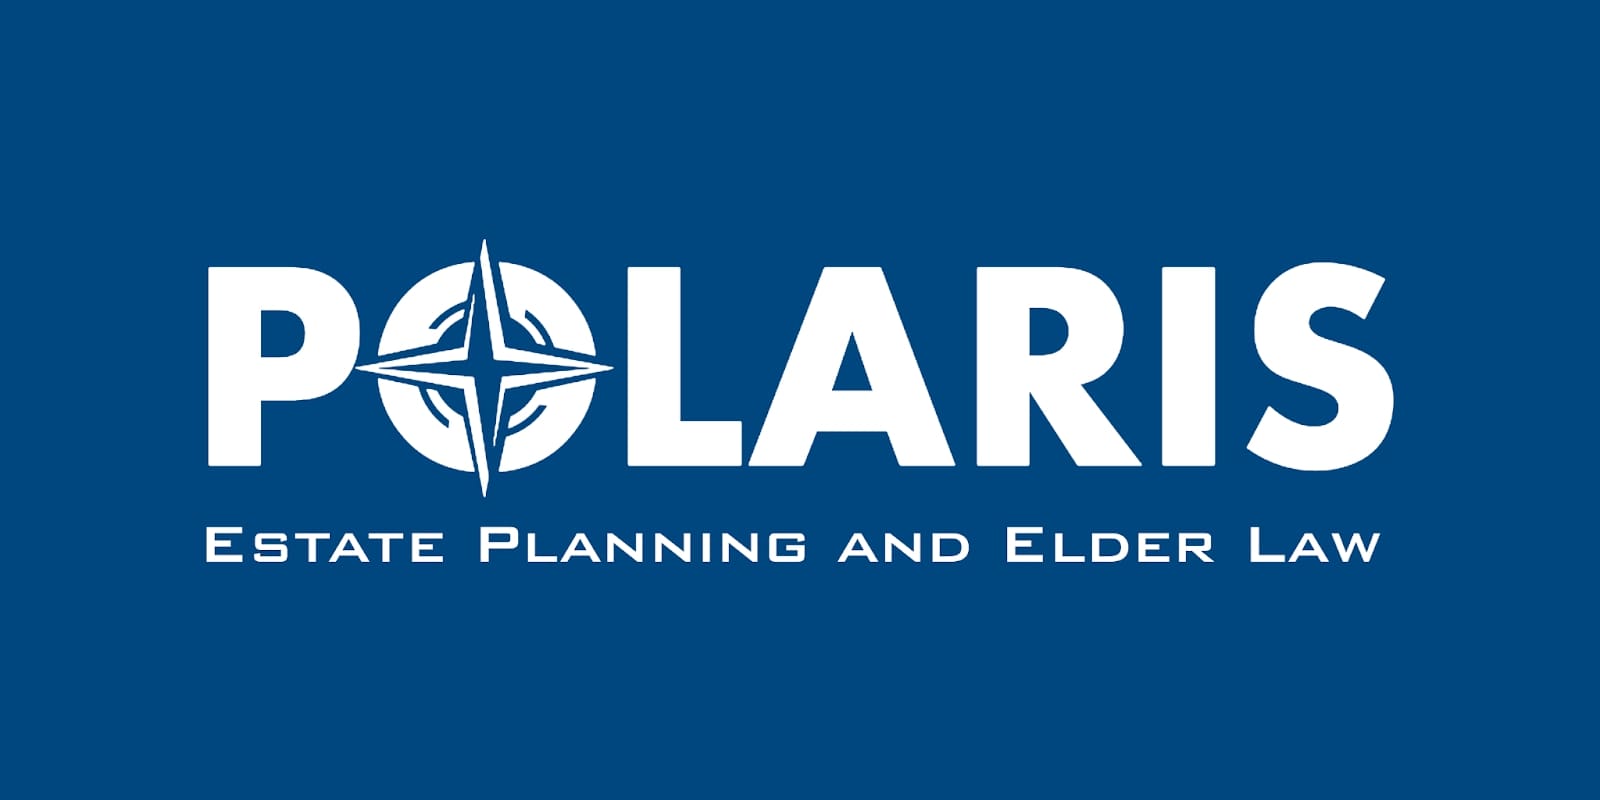 Polaris Estate Planning and Elder Law Profile Picture